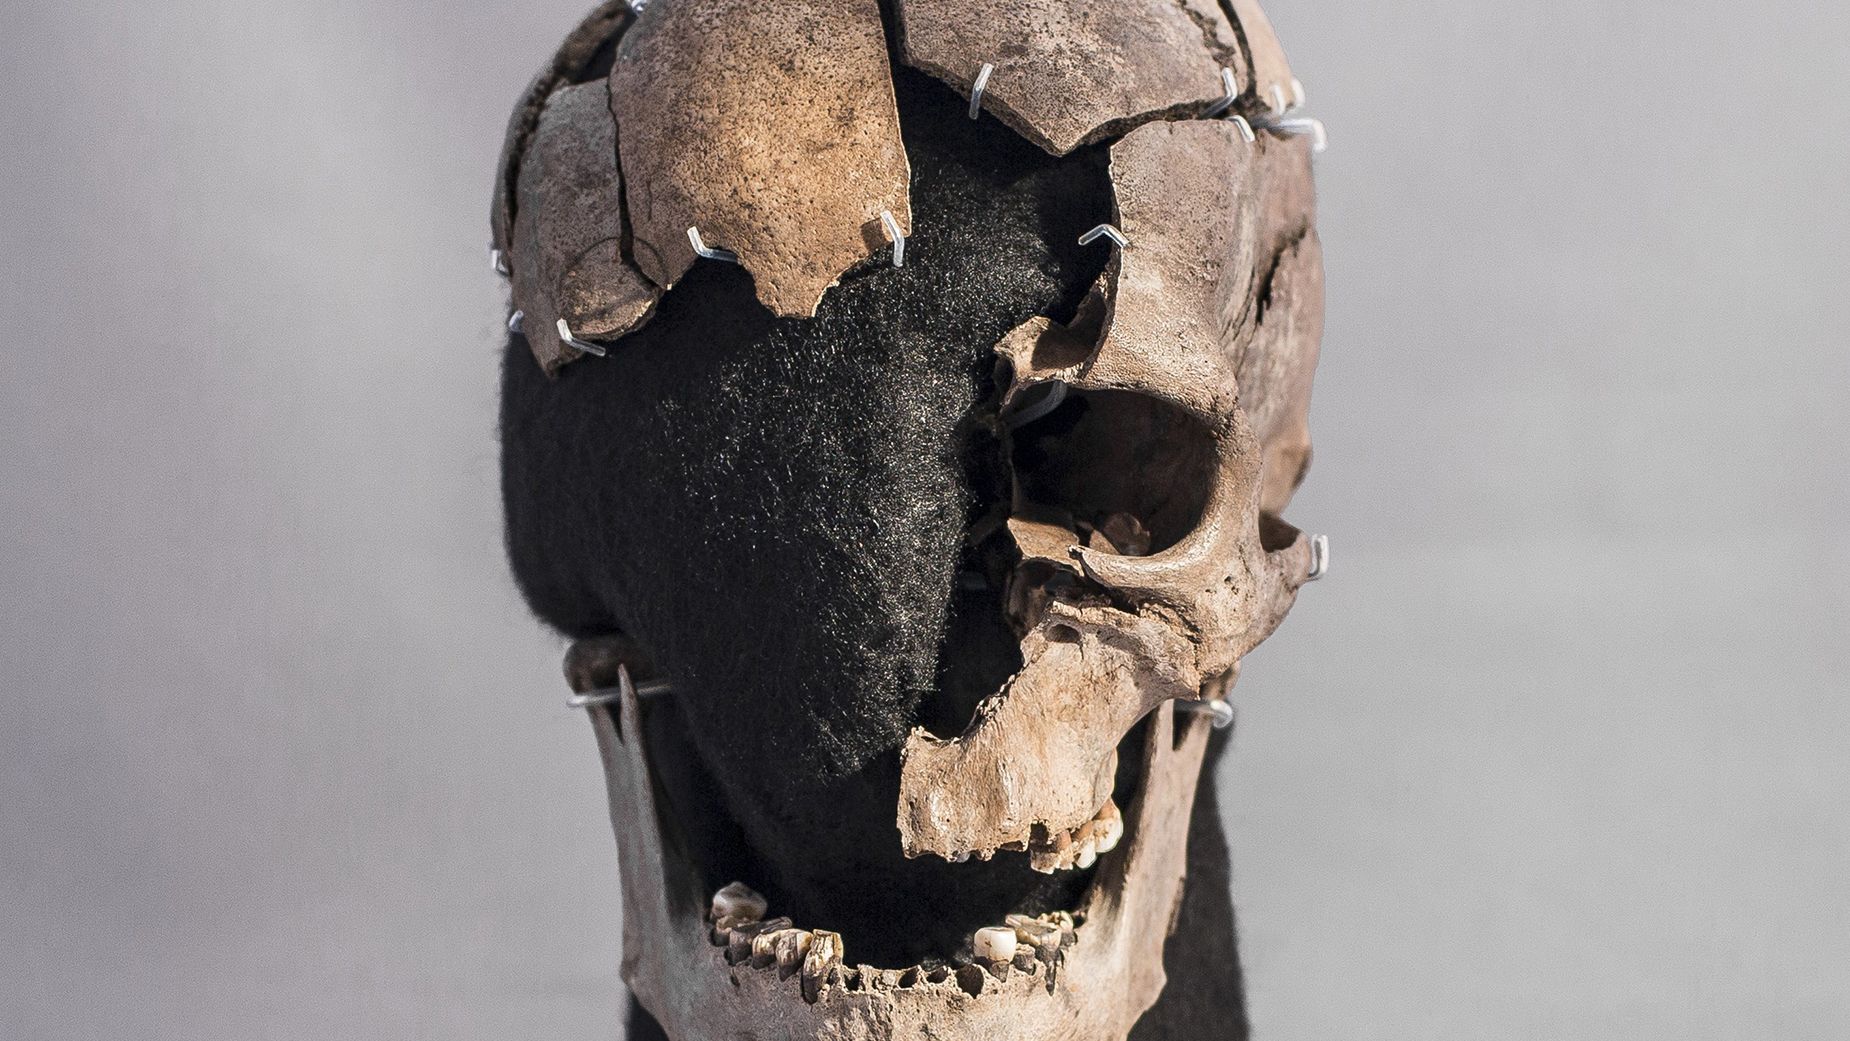 The fragmented skull of "Vittrup Man" is on display at Denmark's Vendsyssel Historical Museum.